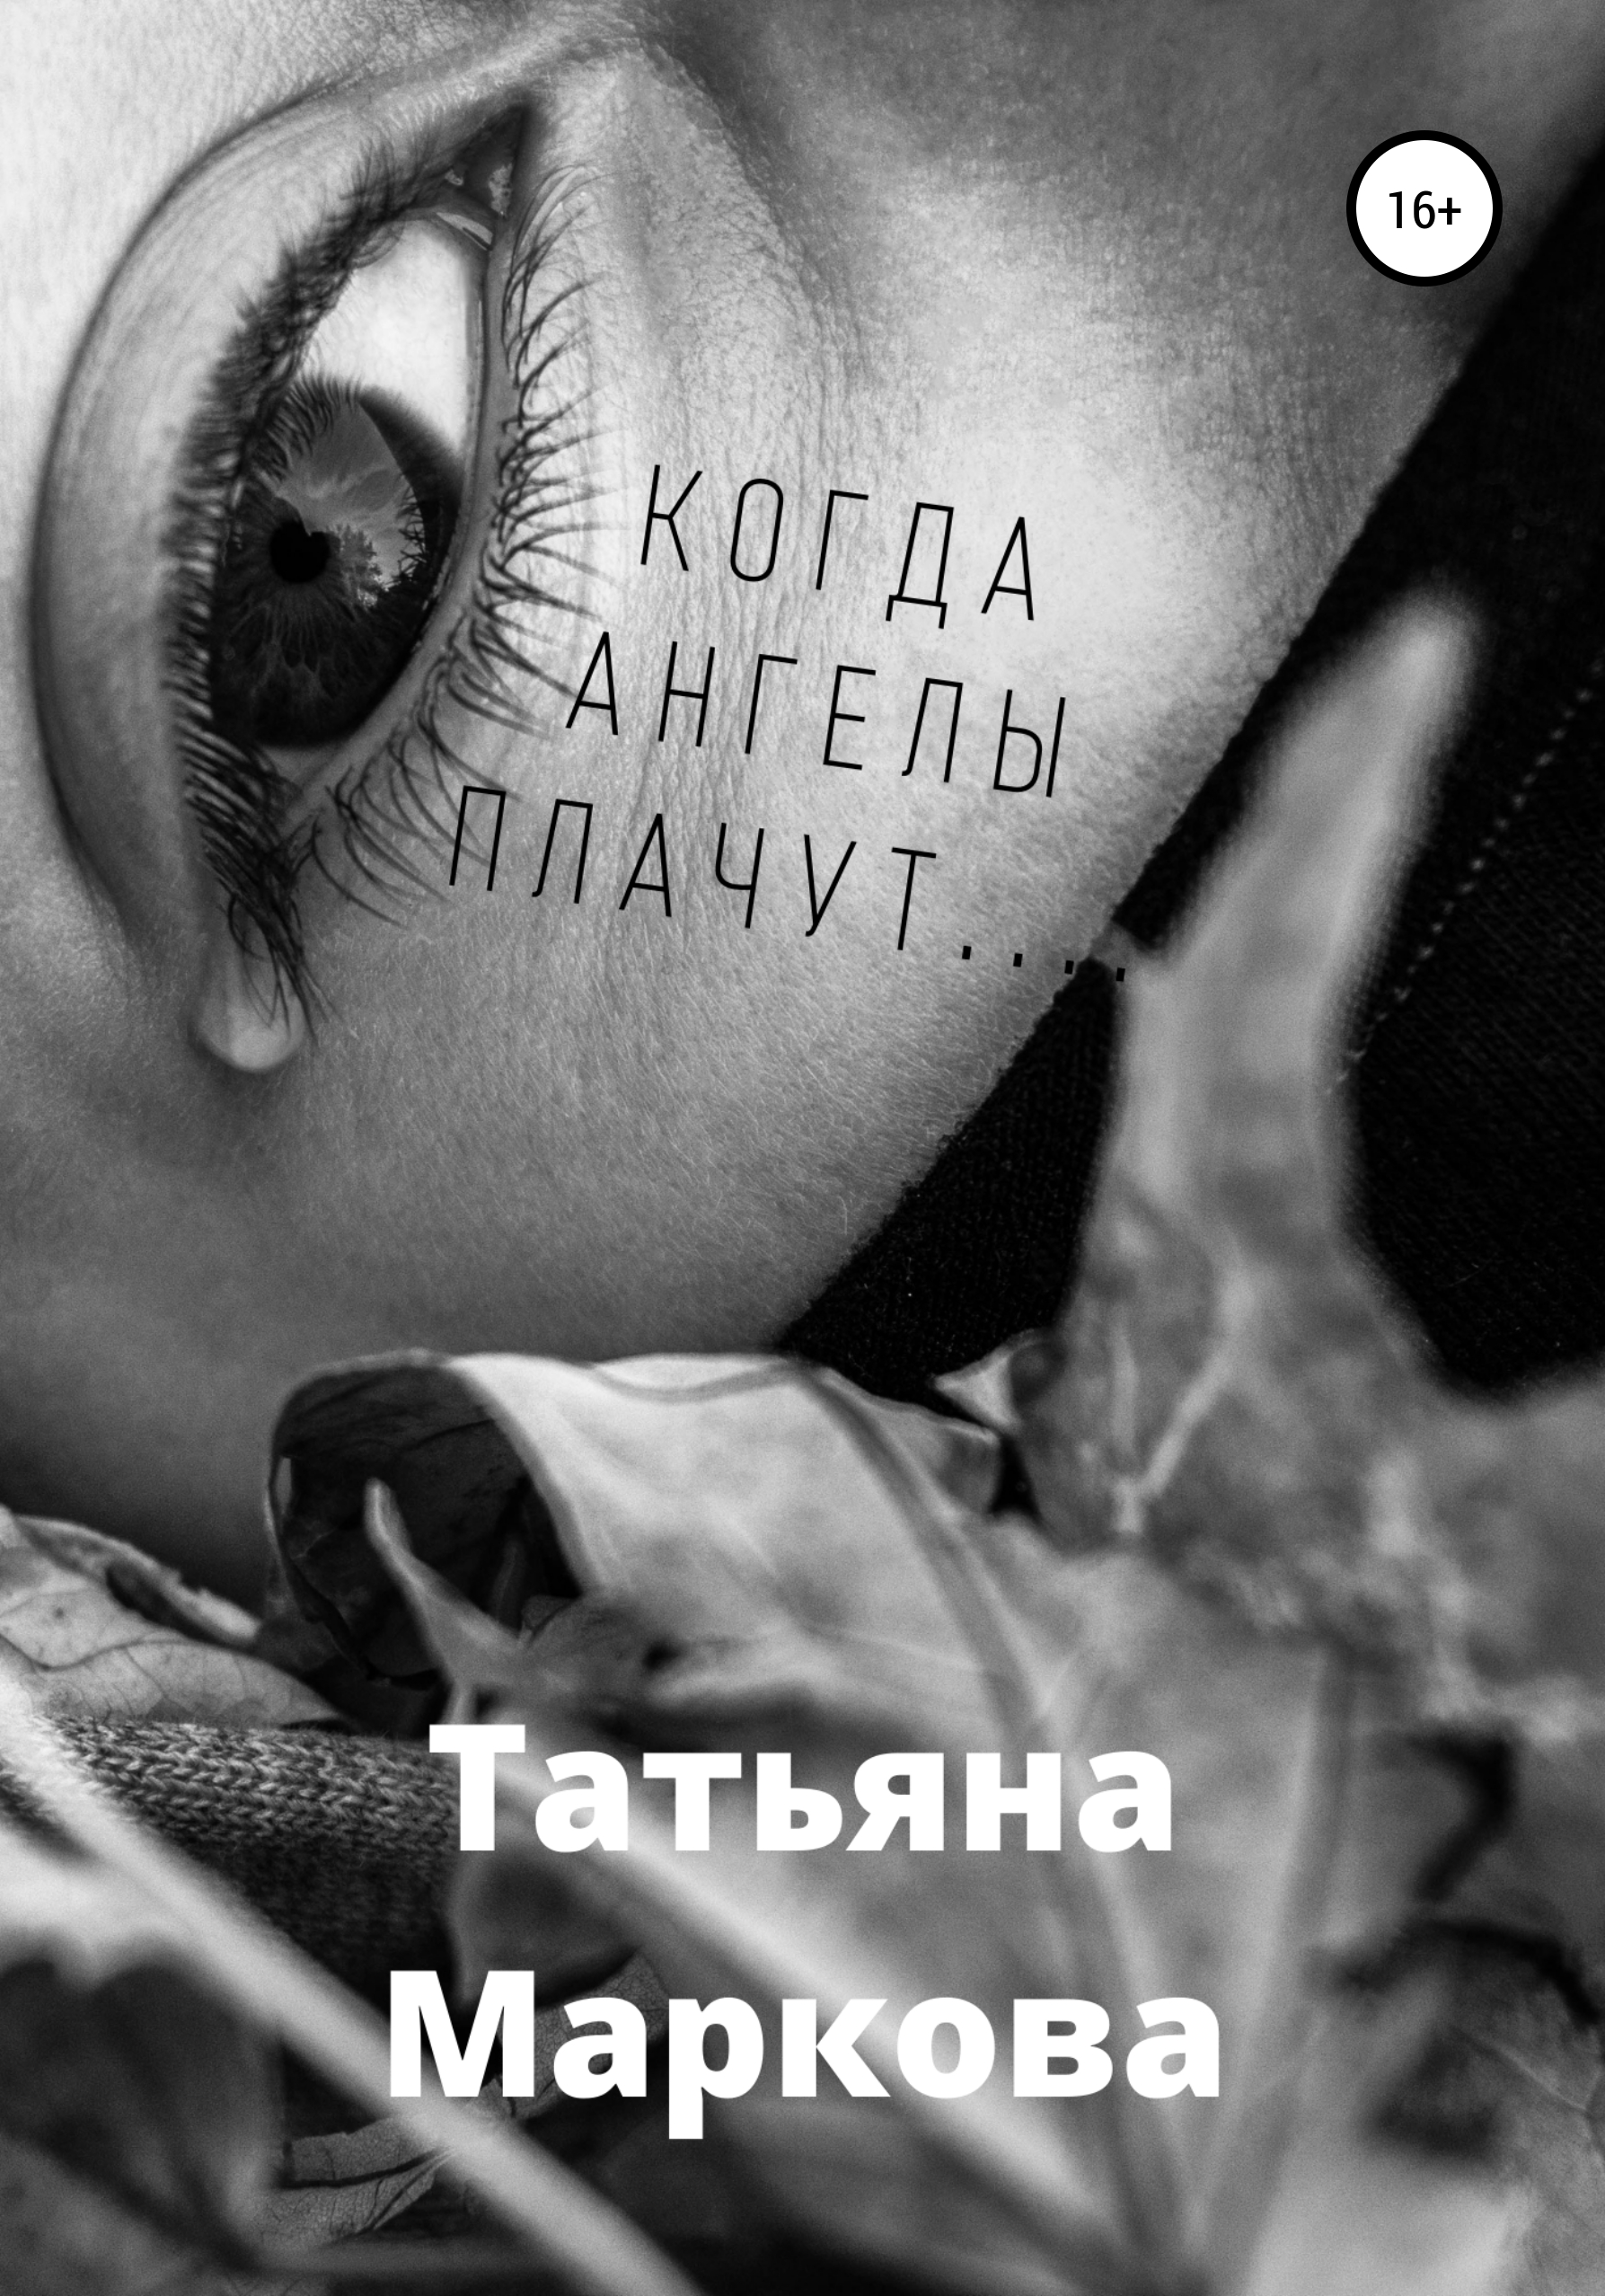 Когда ангелы плачут… – Татьяна Витальевна Маркова